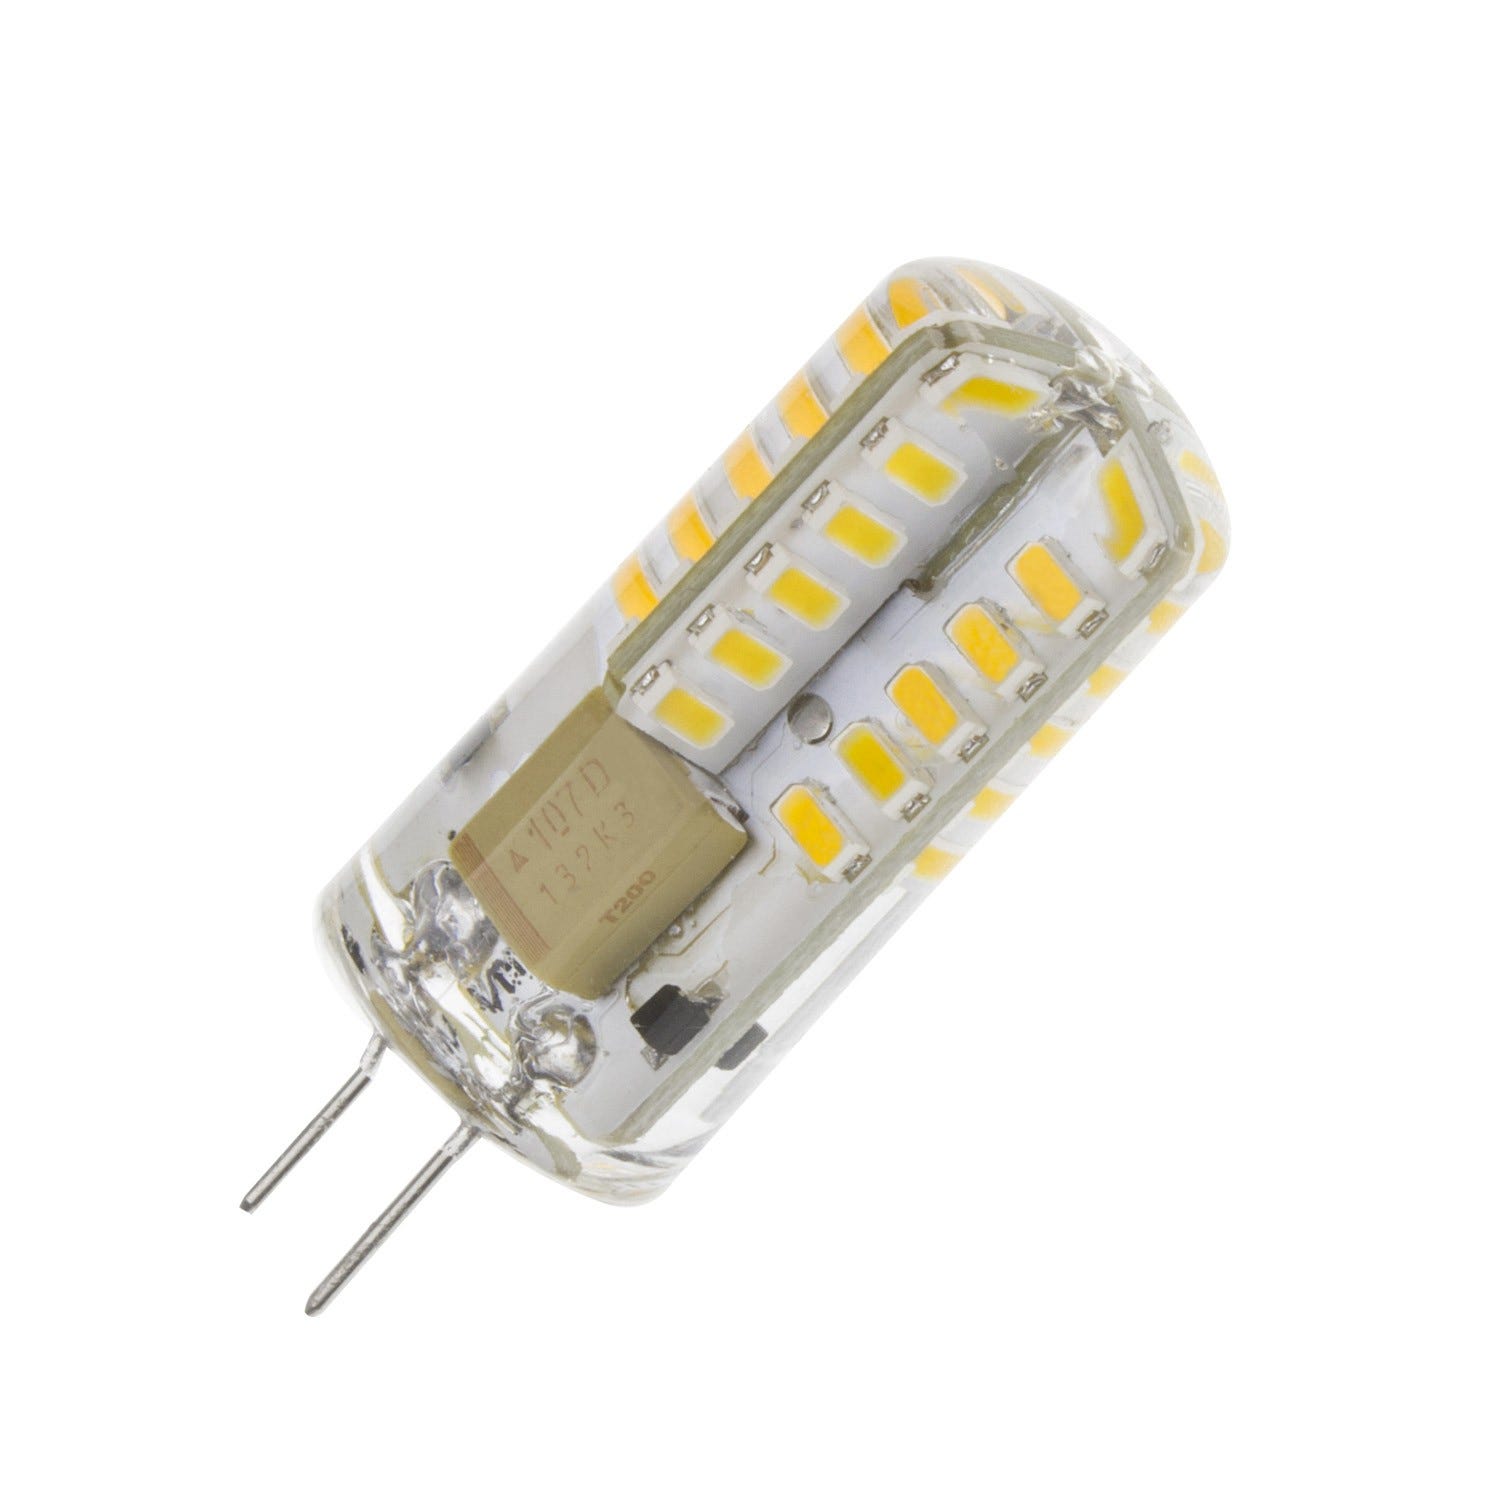 Ampoule led G4 1 watt (eq. 8 watt) - Couleur eclairage - Blanc chaud 3000°K